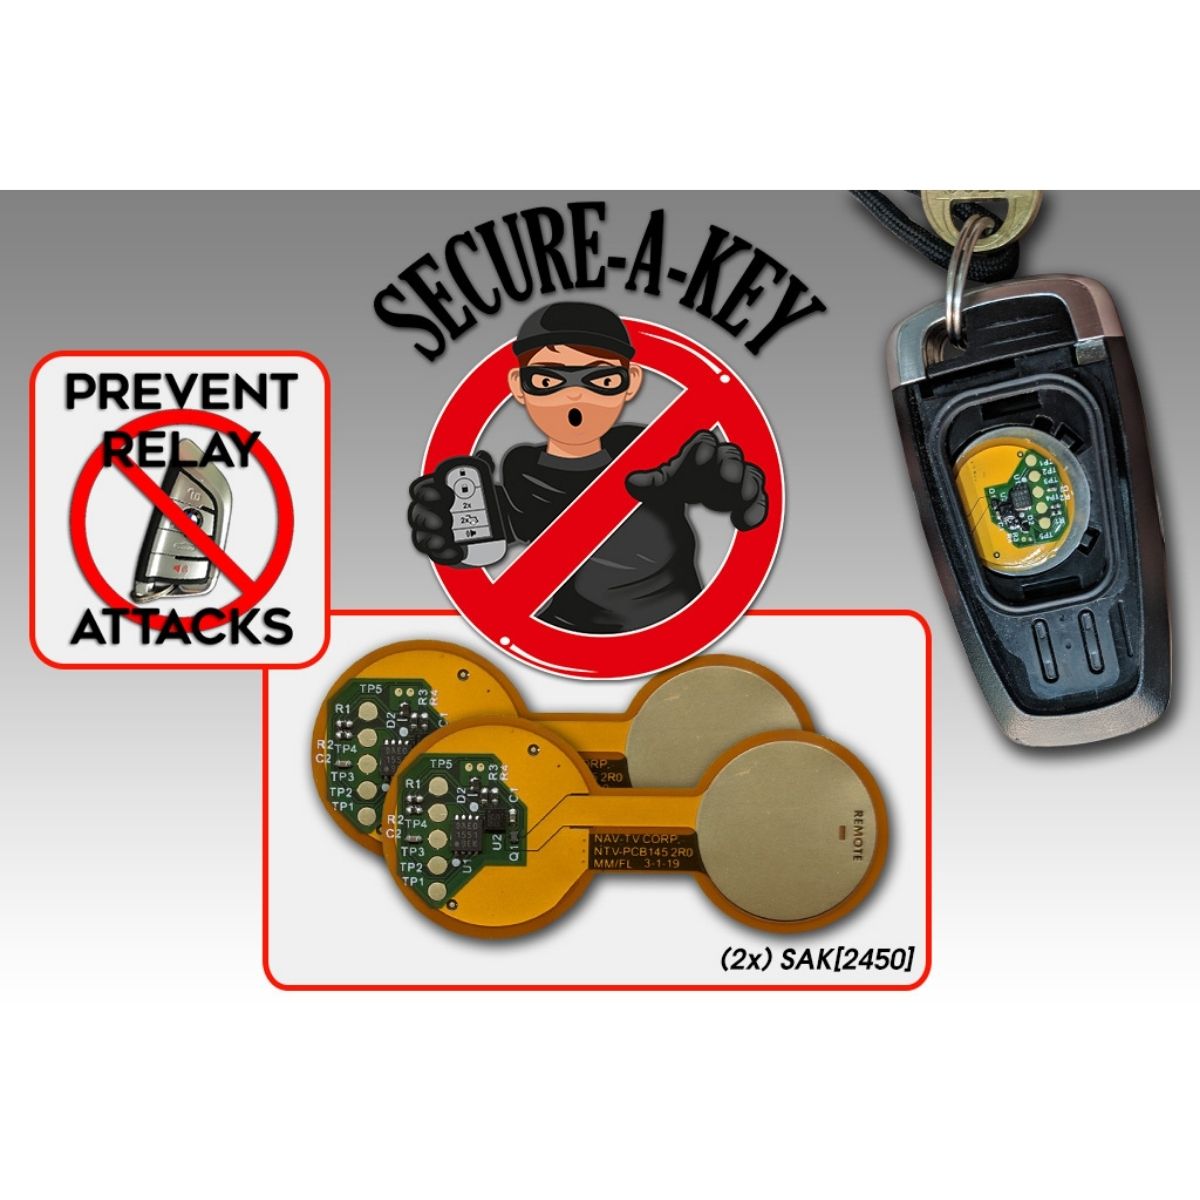 NAV-TV Kit 936 Secure-A-Key/2450 (Double)